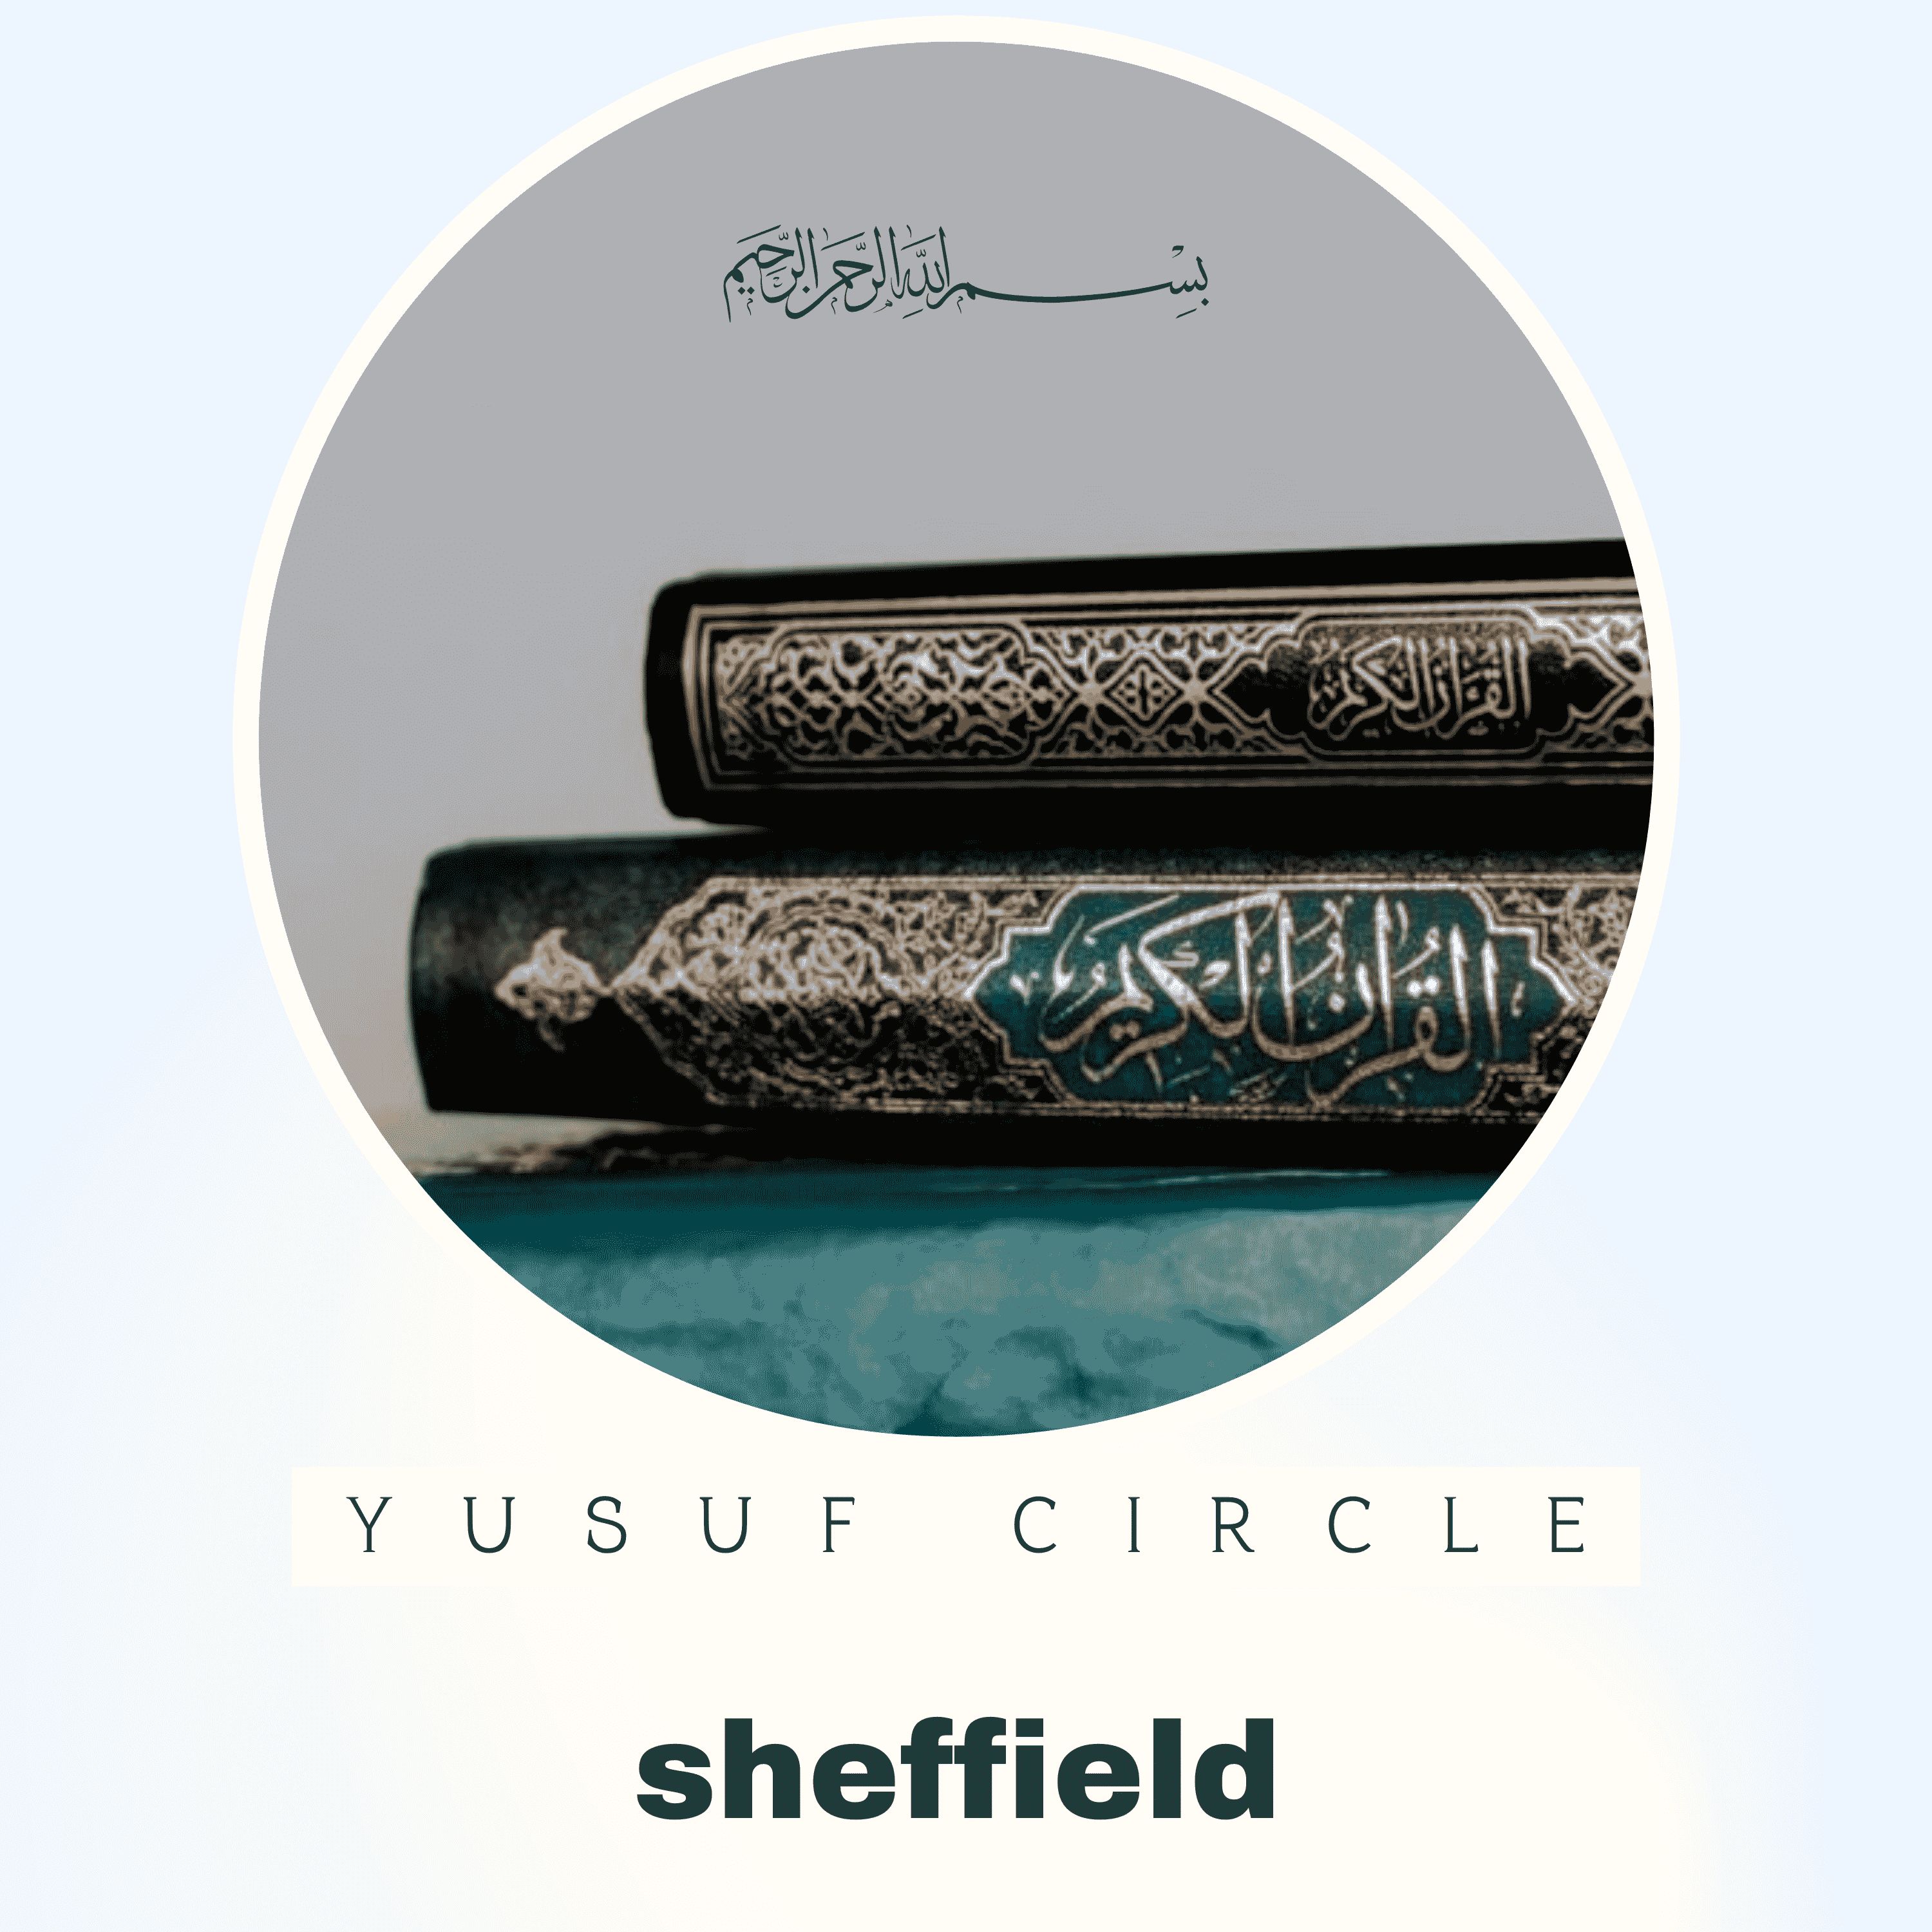 Yusuf Circle Sheffield